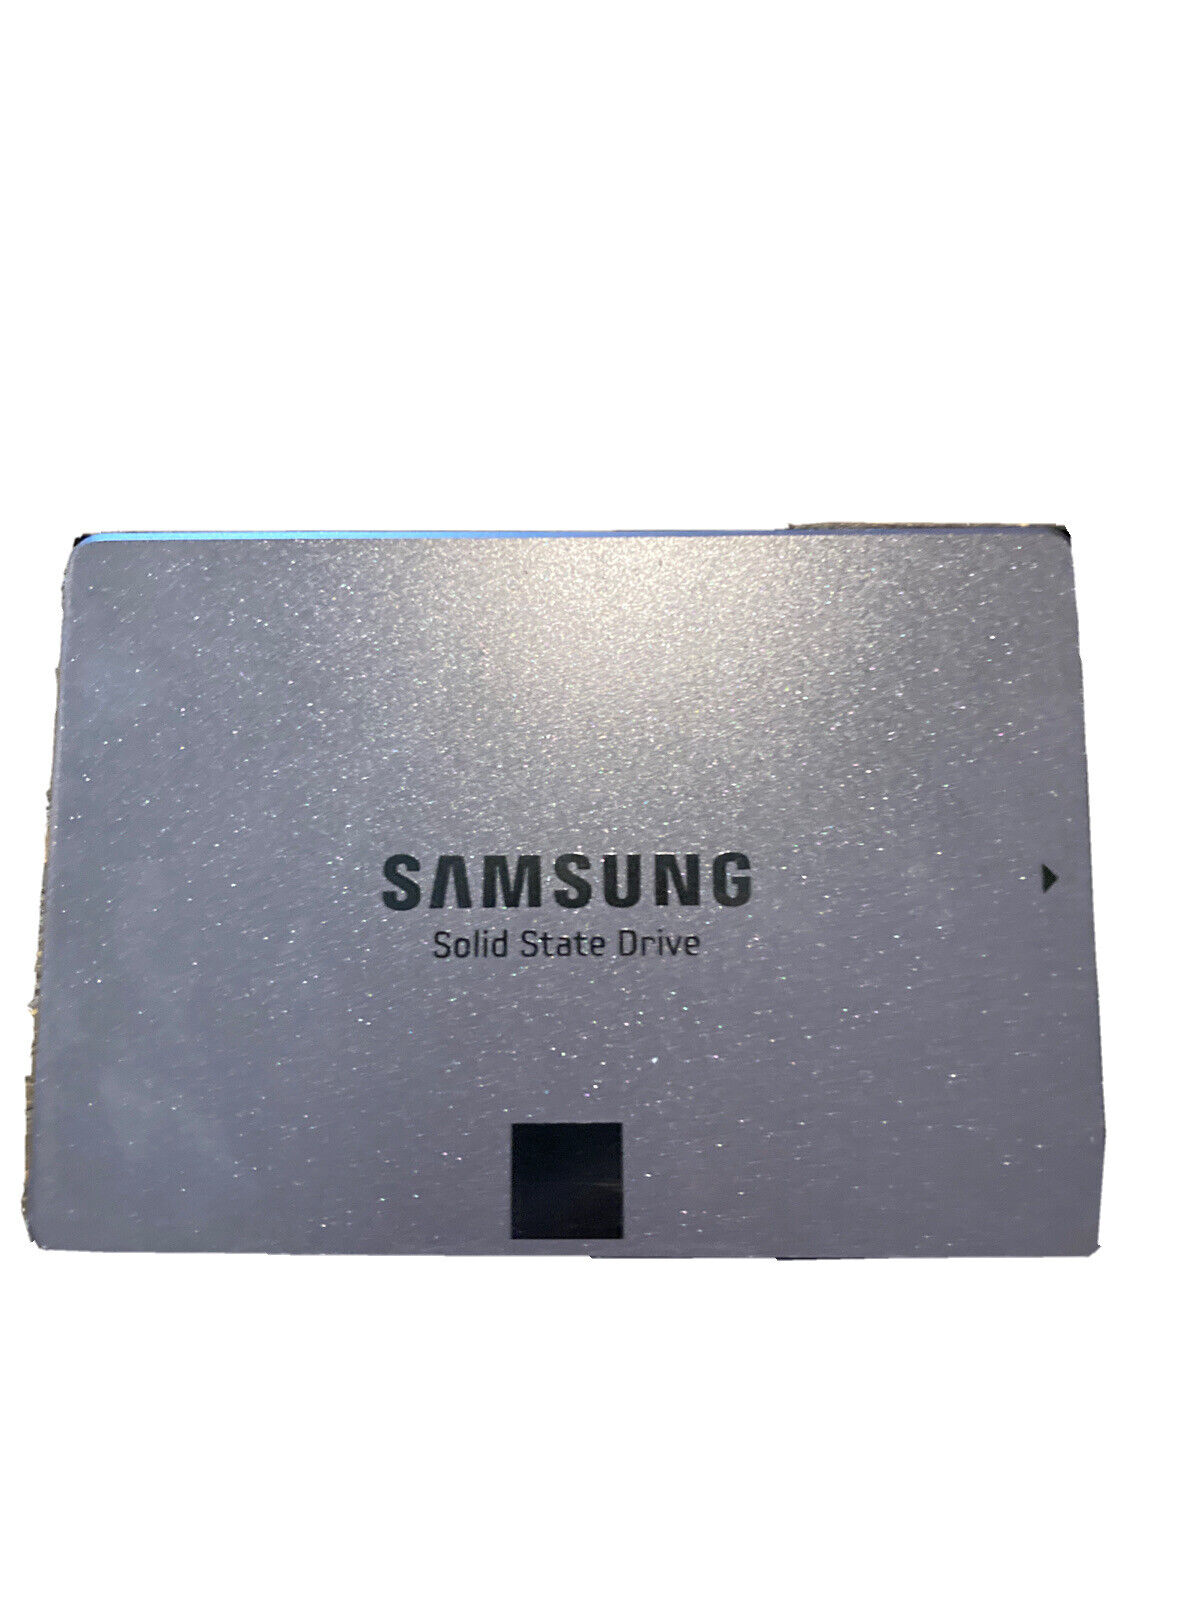 120 Gb Ssd Samsung 840 Evo Formatted, No Operating System